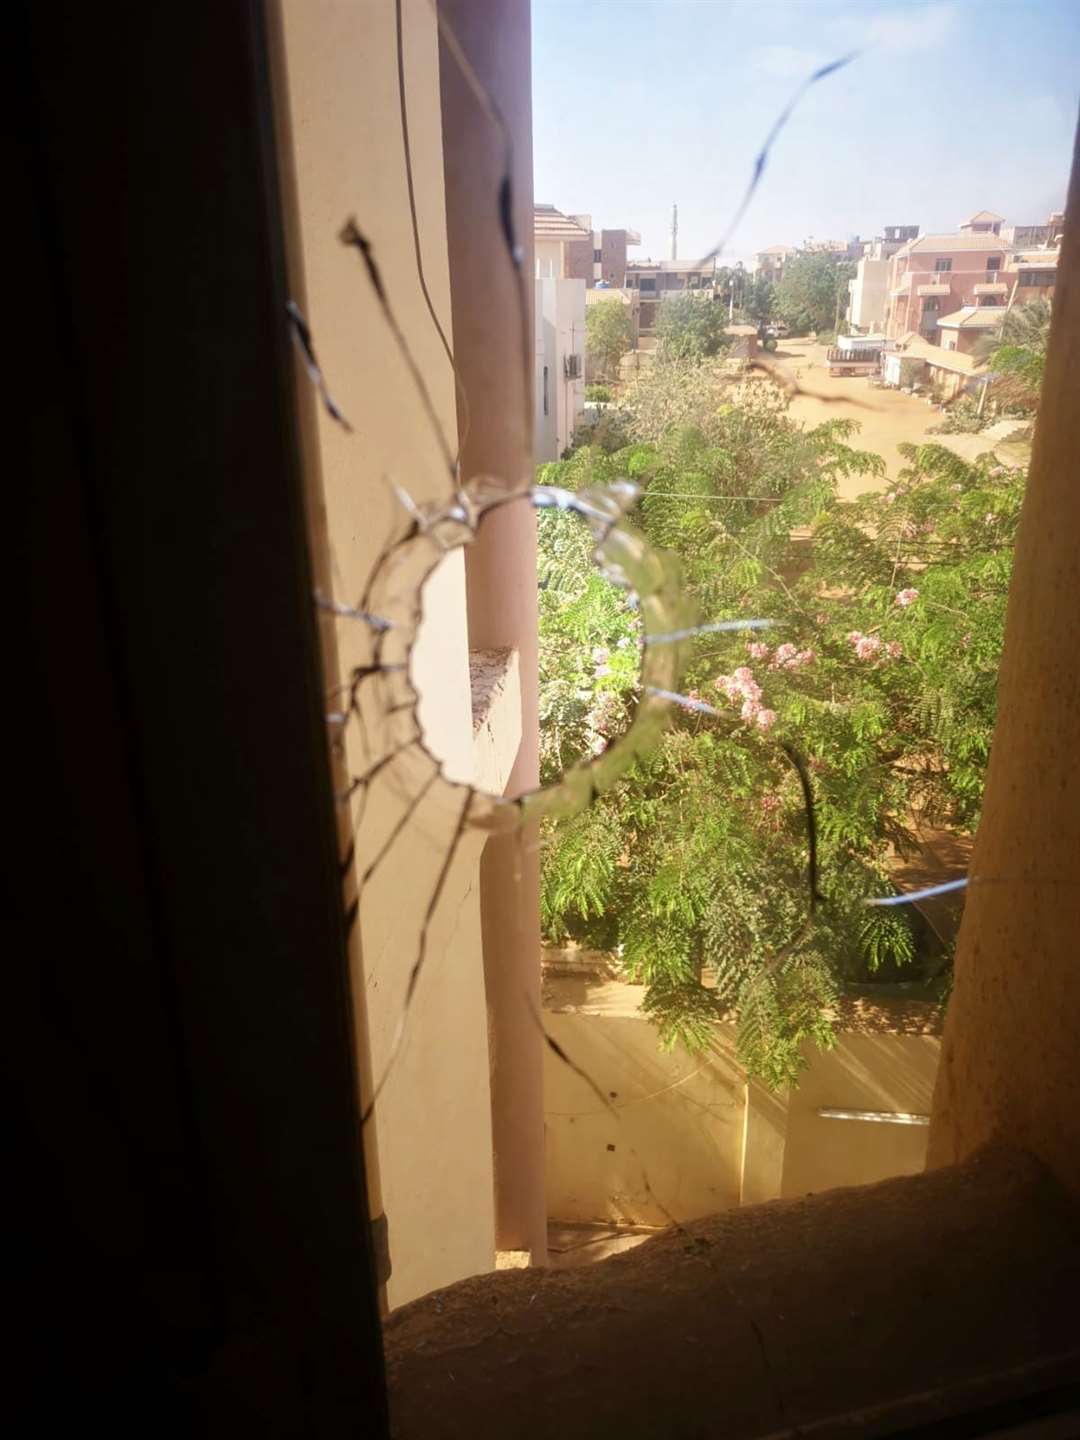 Damage to a window at Munzir Salman’s home (Munzir Salman/PA)